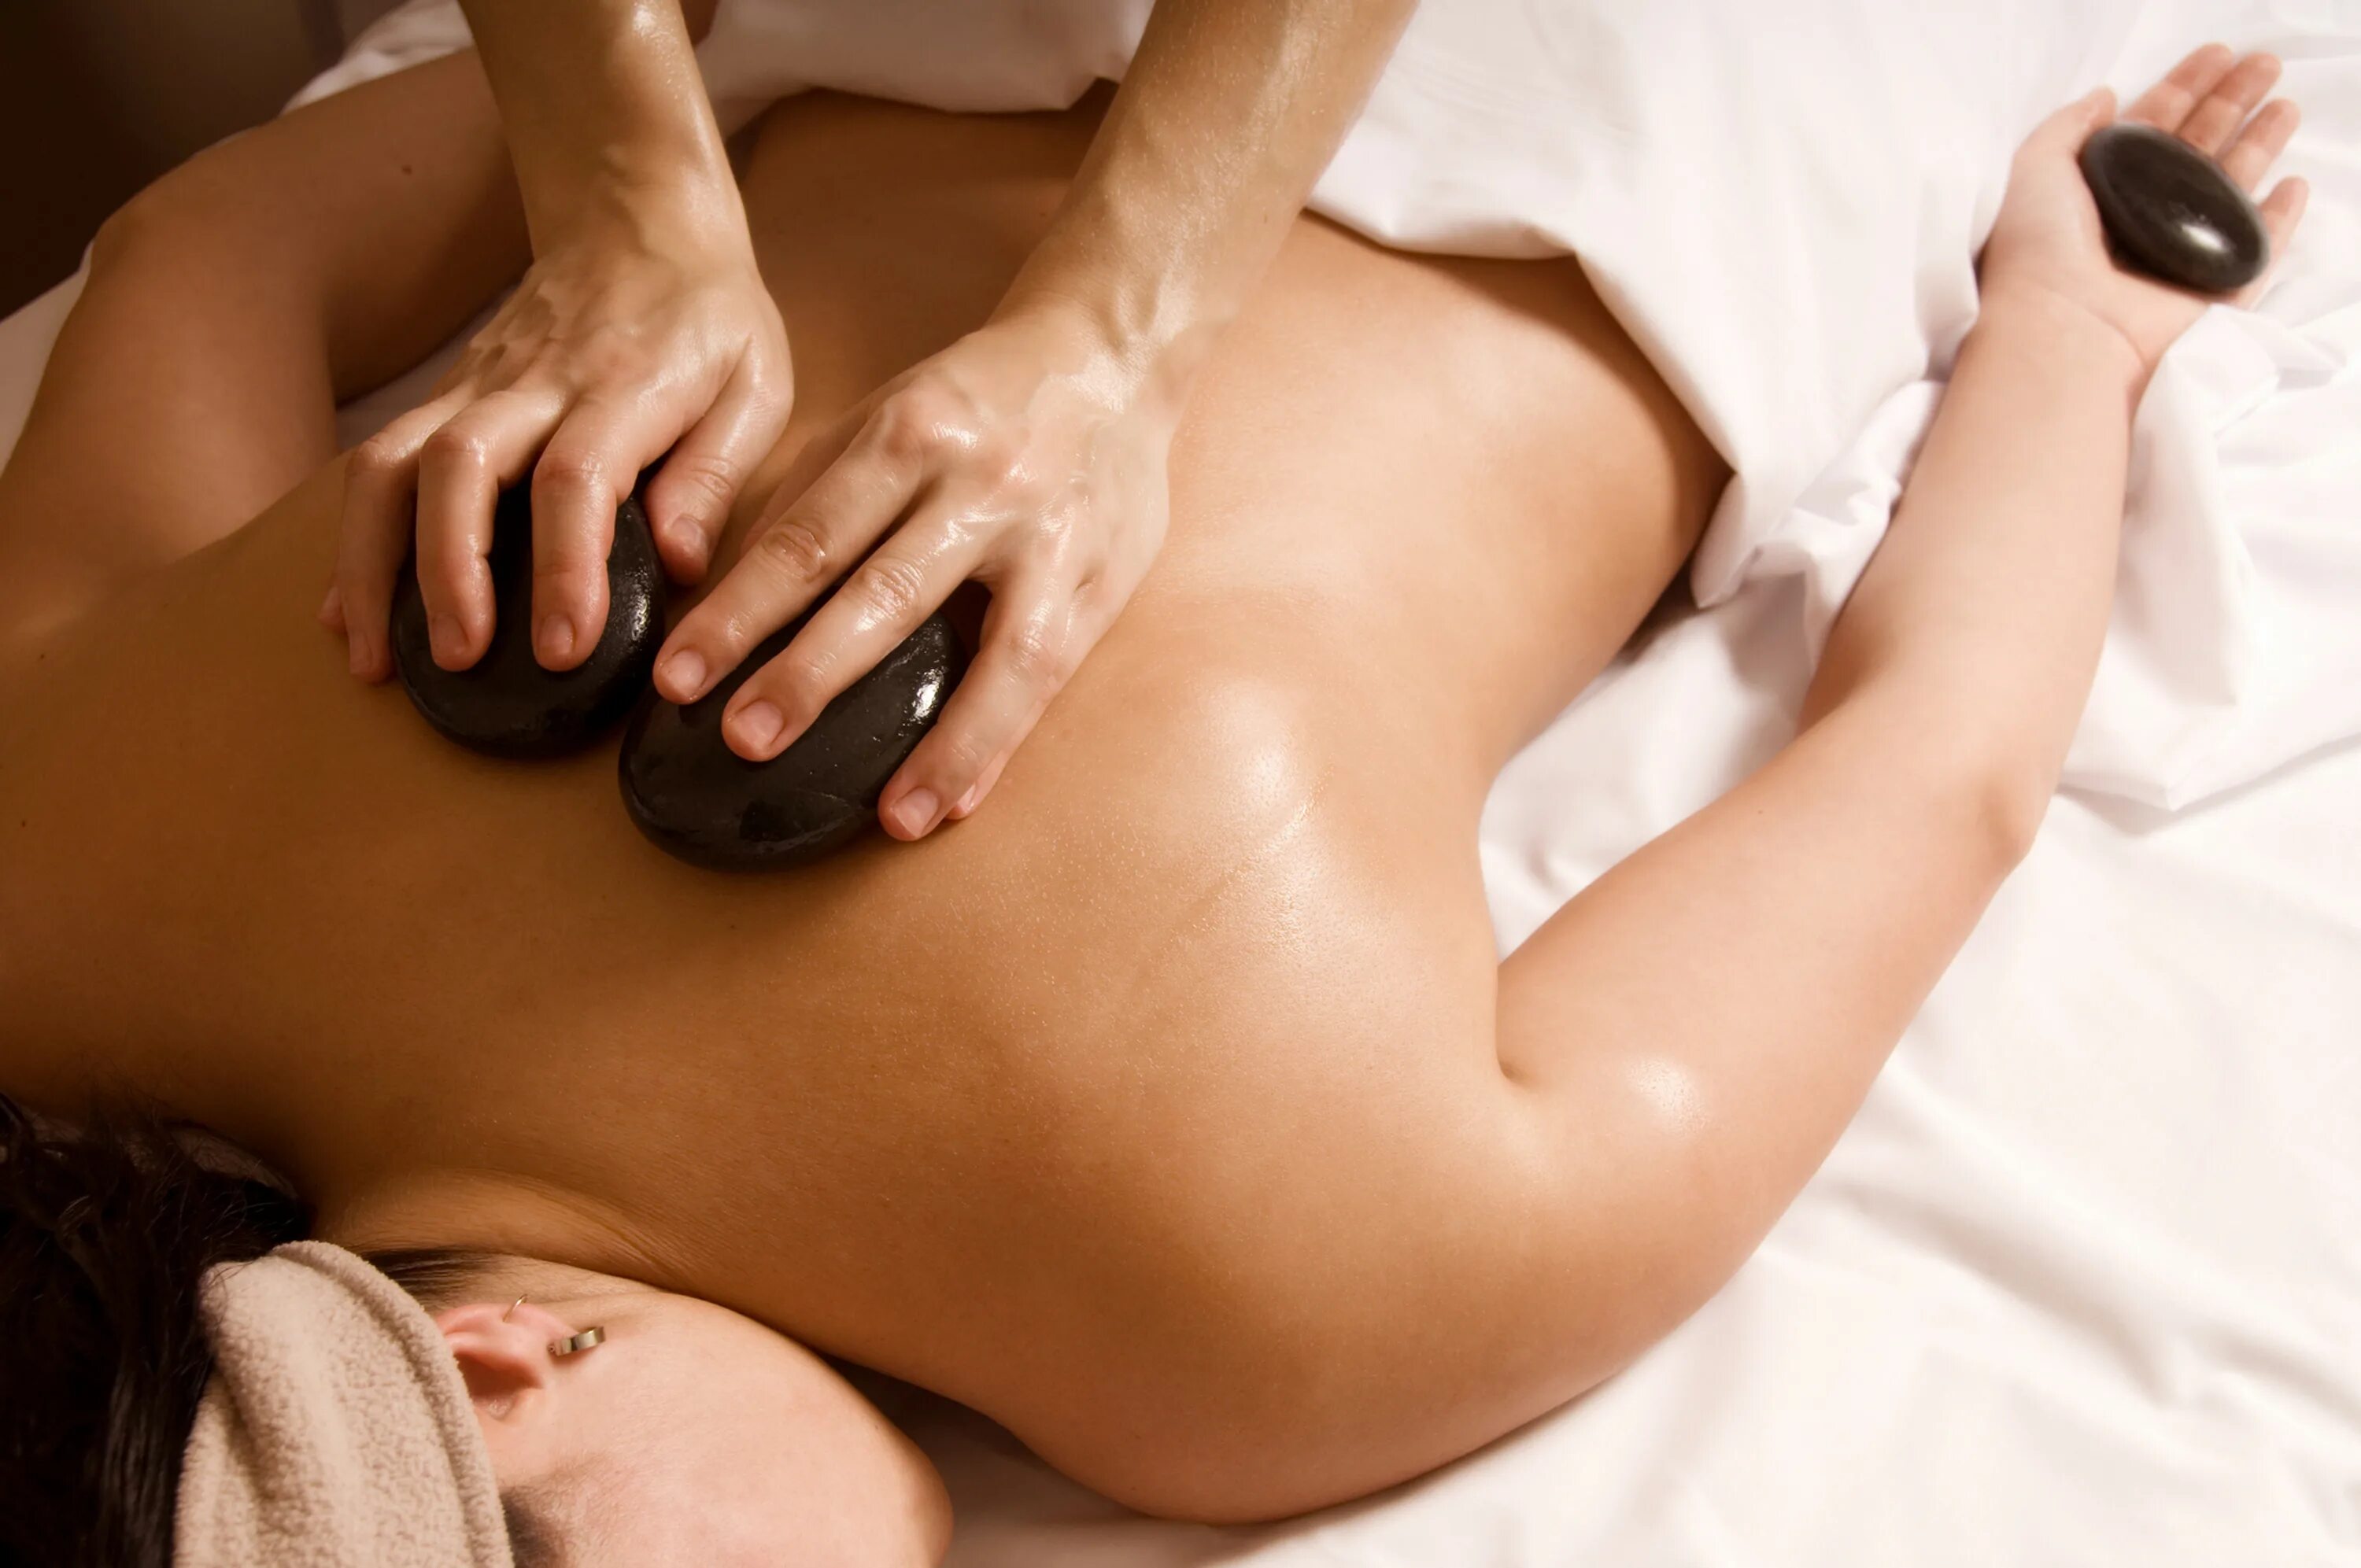 Hot body massage. Массаж горячими камнями. Стоун - терапия.. Массаж горячими камнями (Stone massage). Тайский Стоун массаж. Горячие камни для массажа.